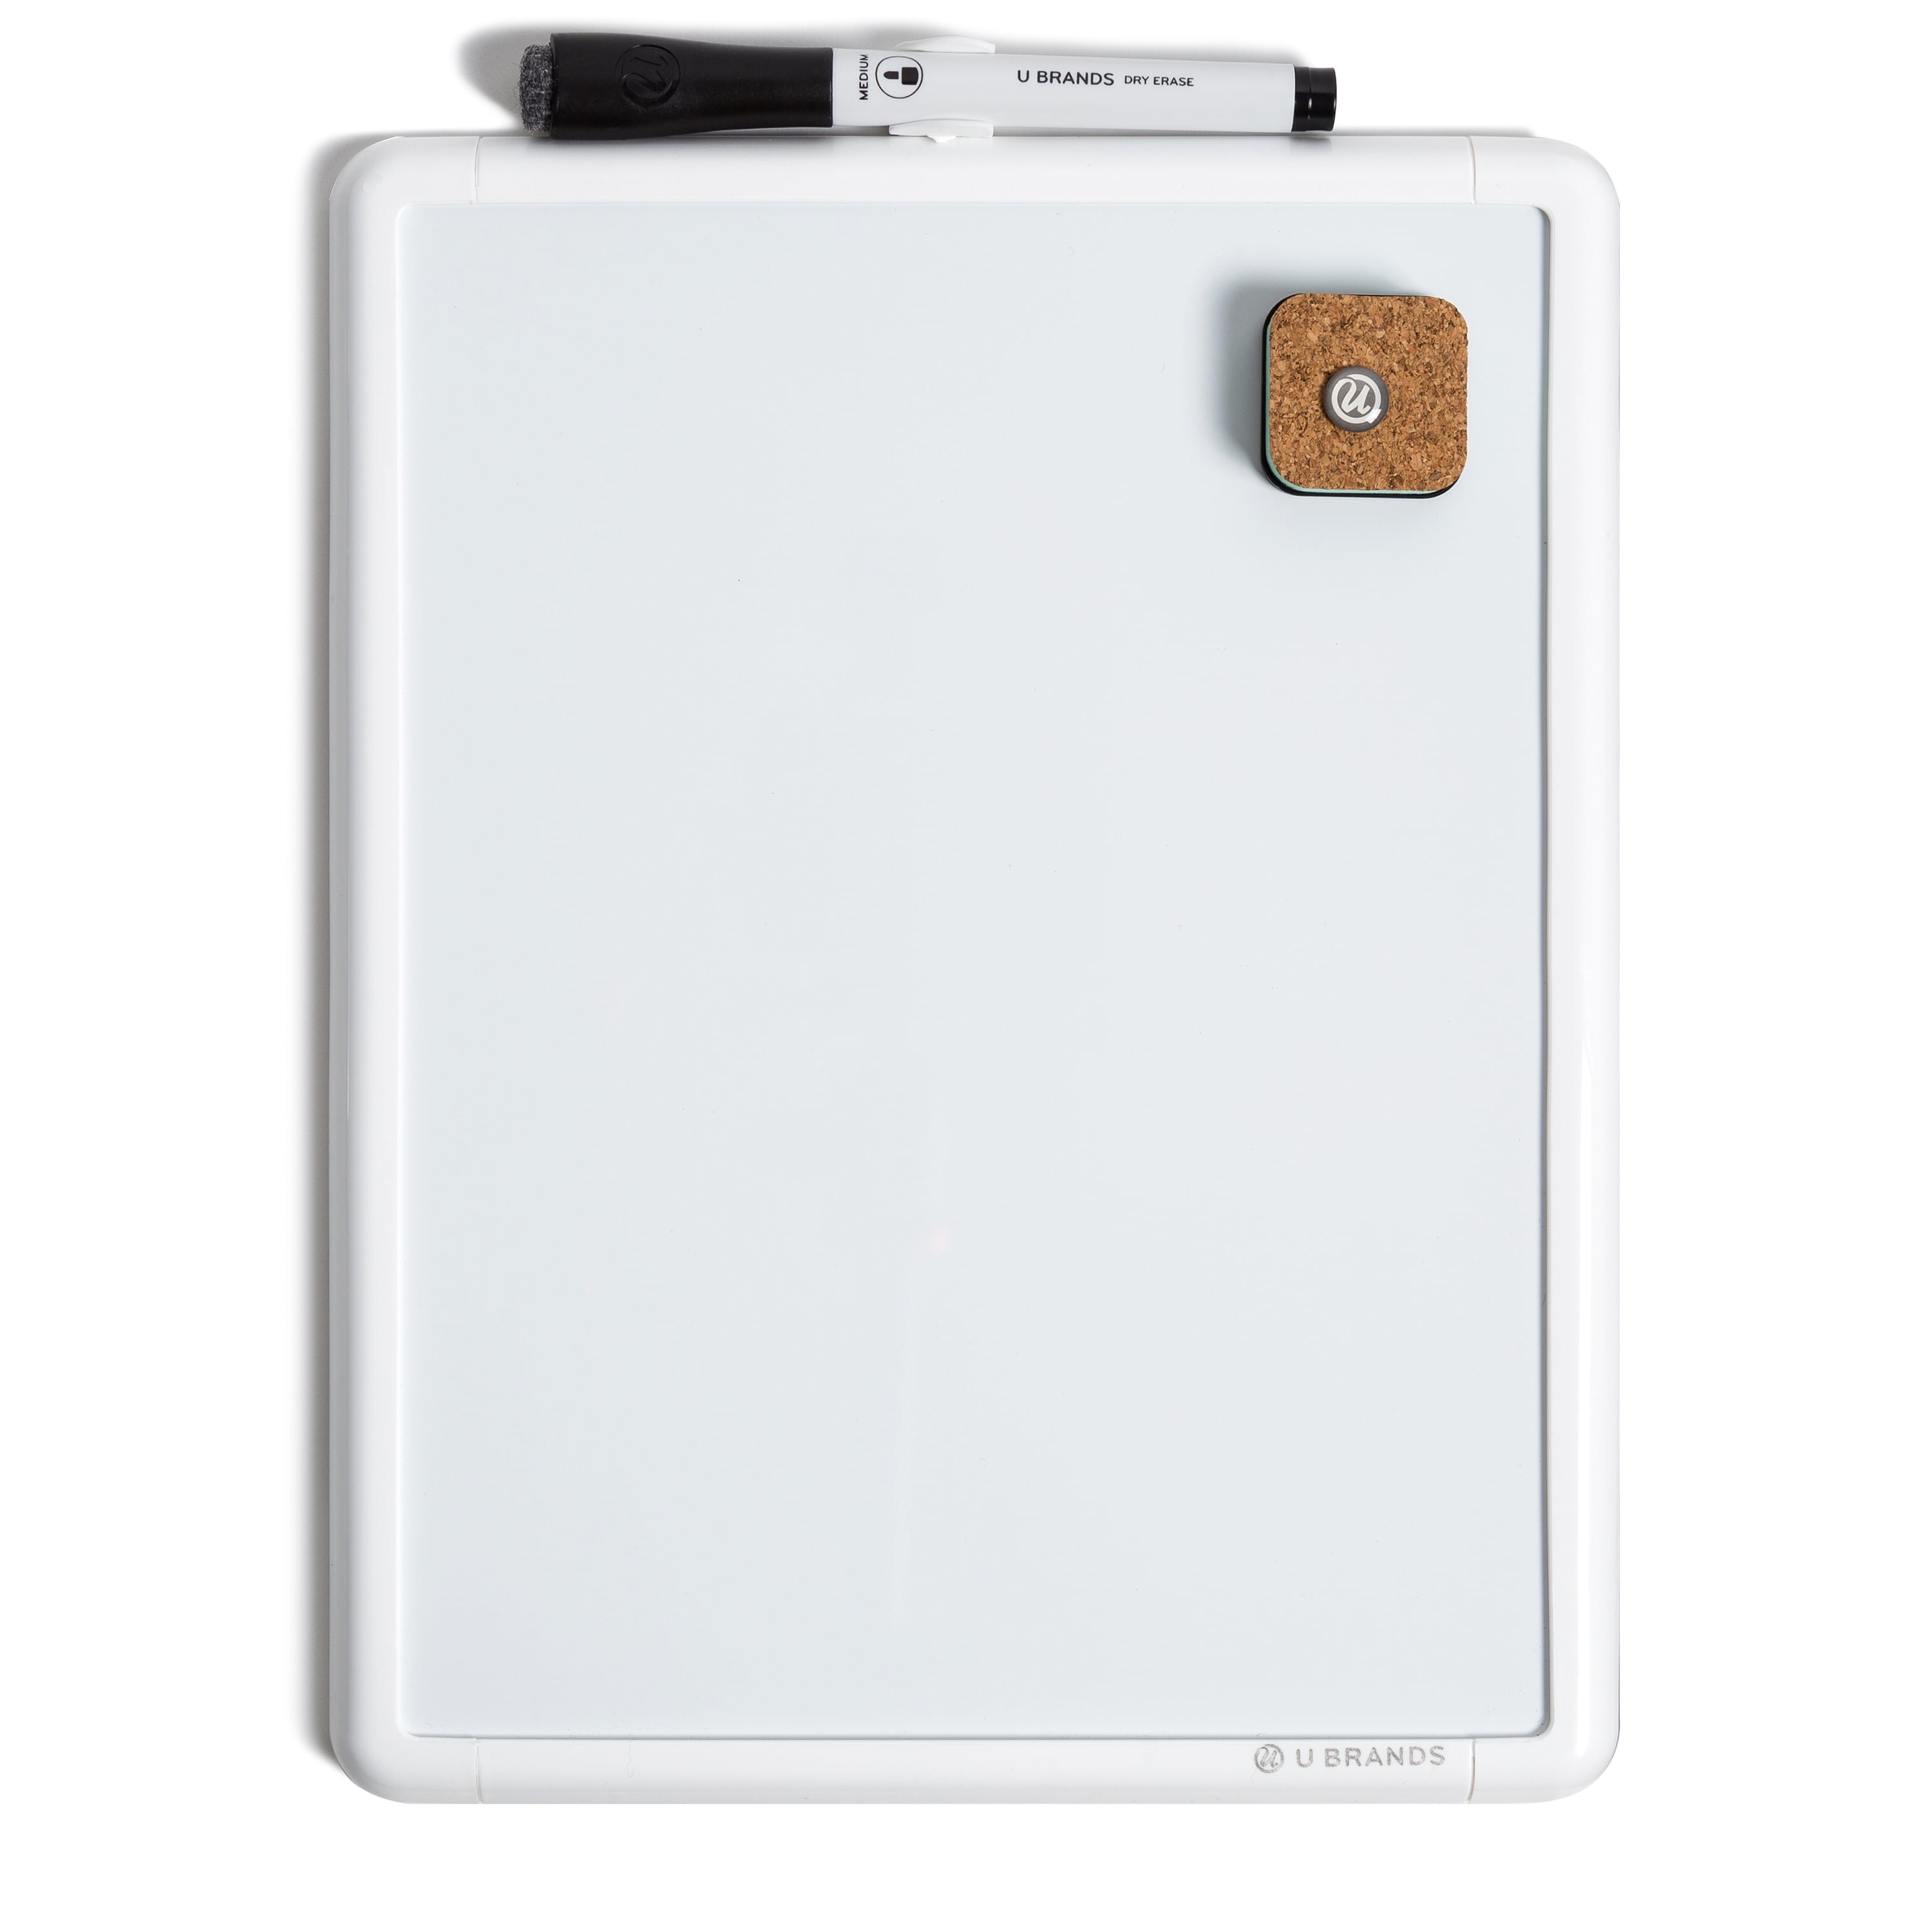 8.5 x 11 3pcs U Brands Contempo Magnetic Dry Erase Board White Frame 